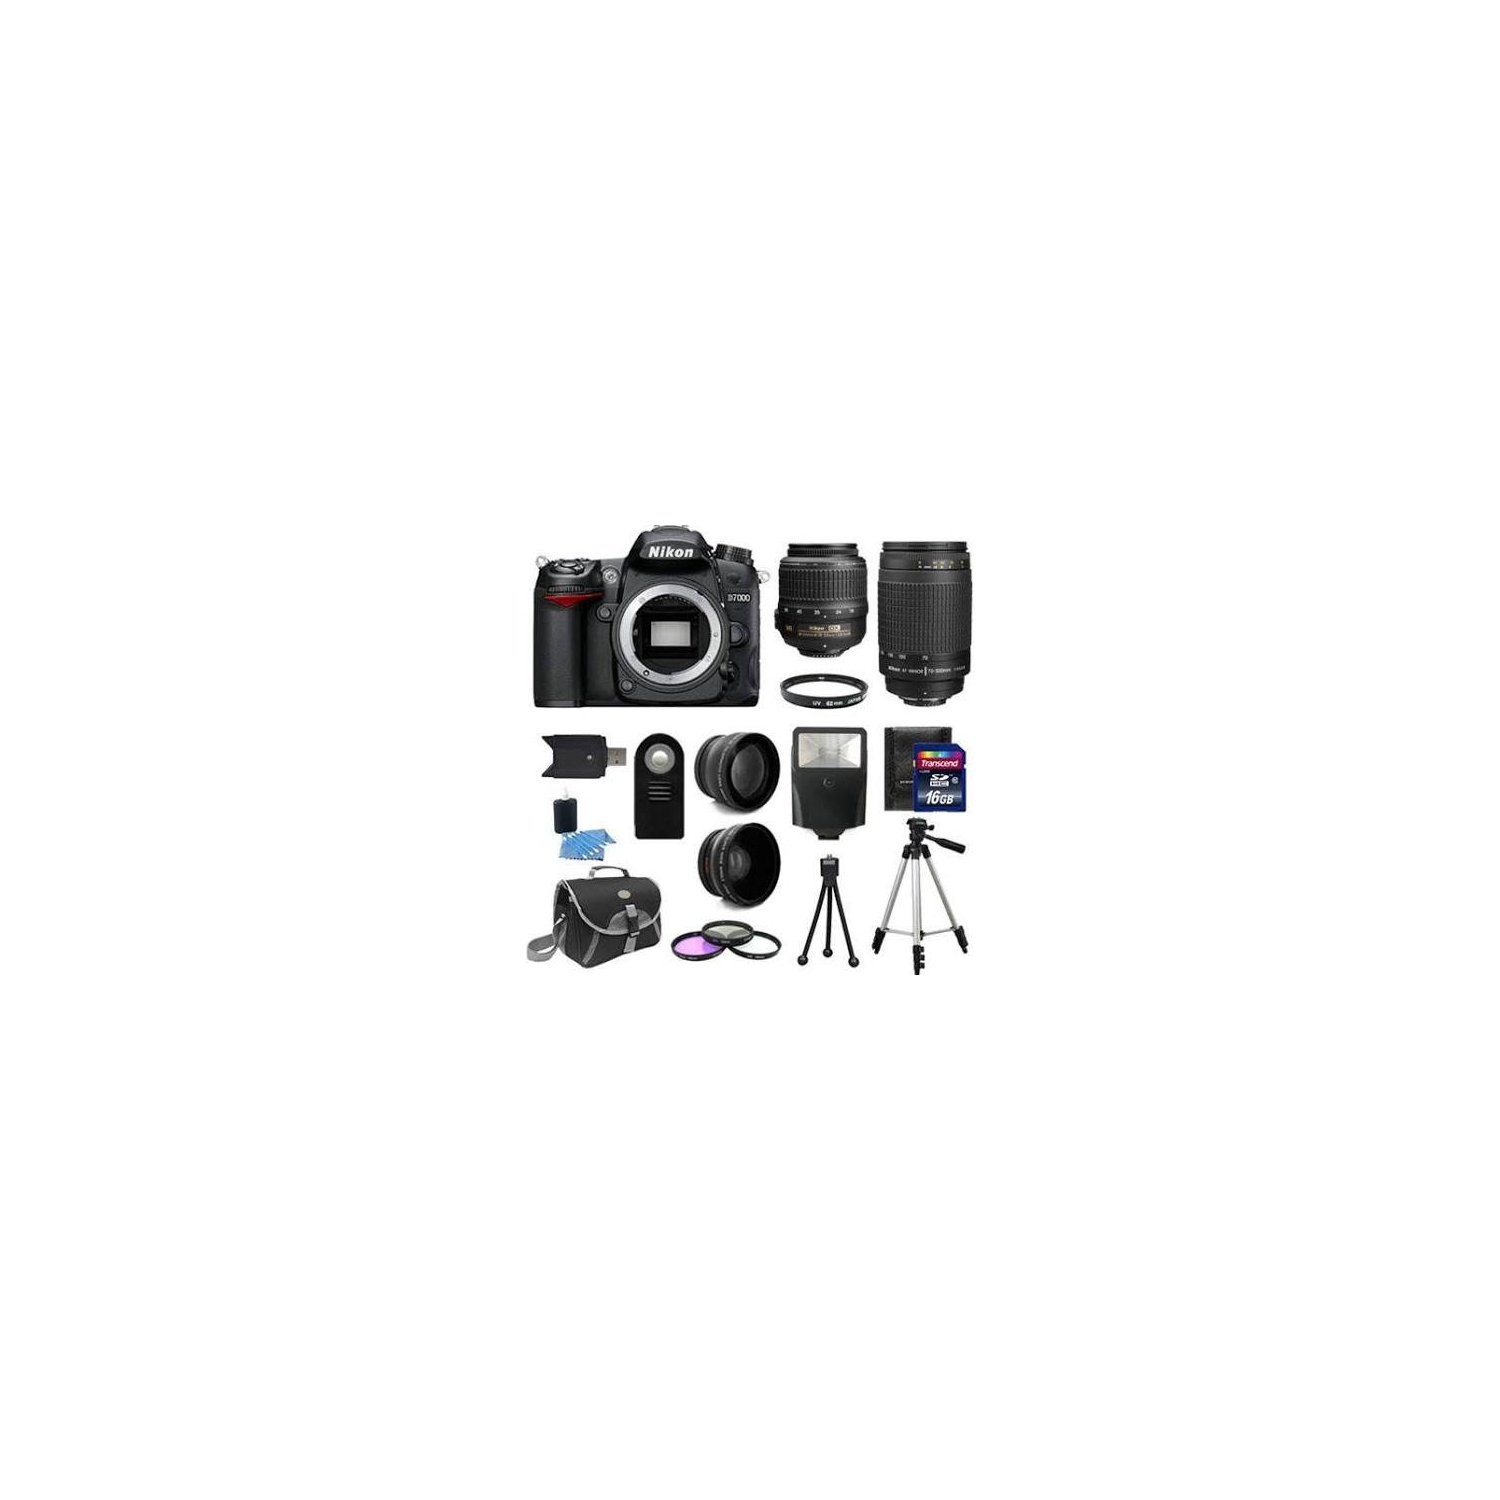 Nikon D7000 Digital SLR Camera + 4 Lens: 18-55 VR + 70-300 + 16GB Kit & More - US Version w/ Seller Warranty